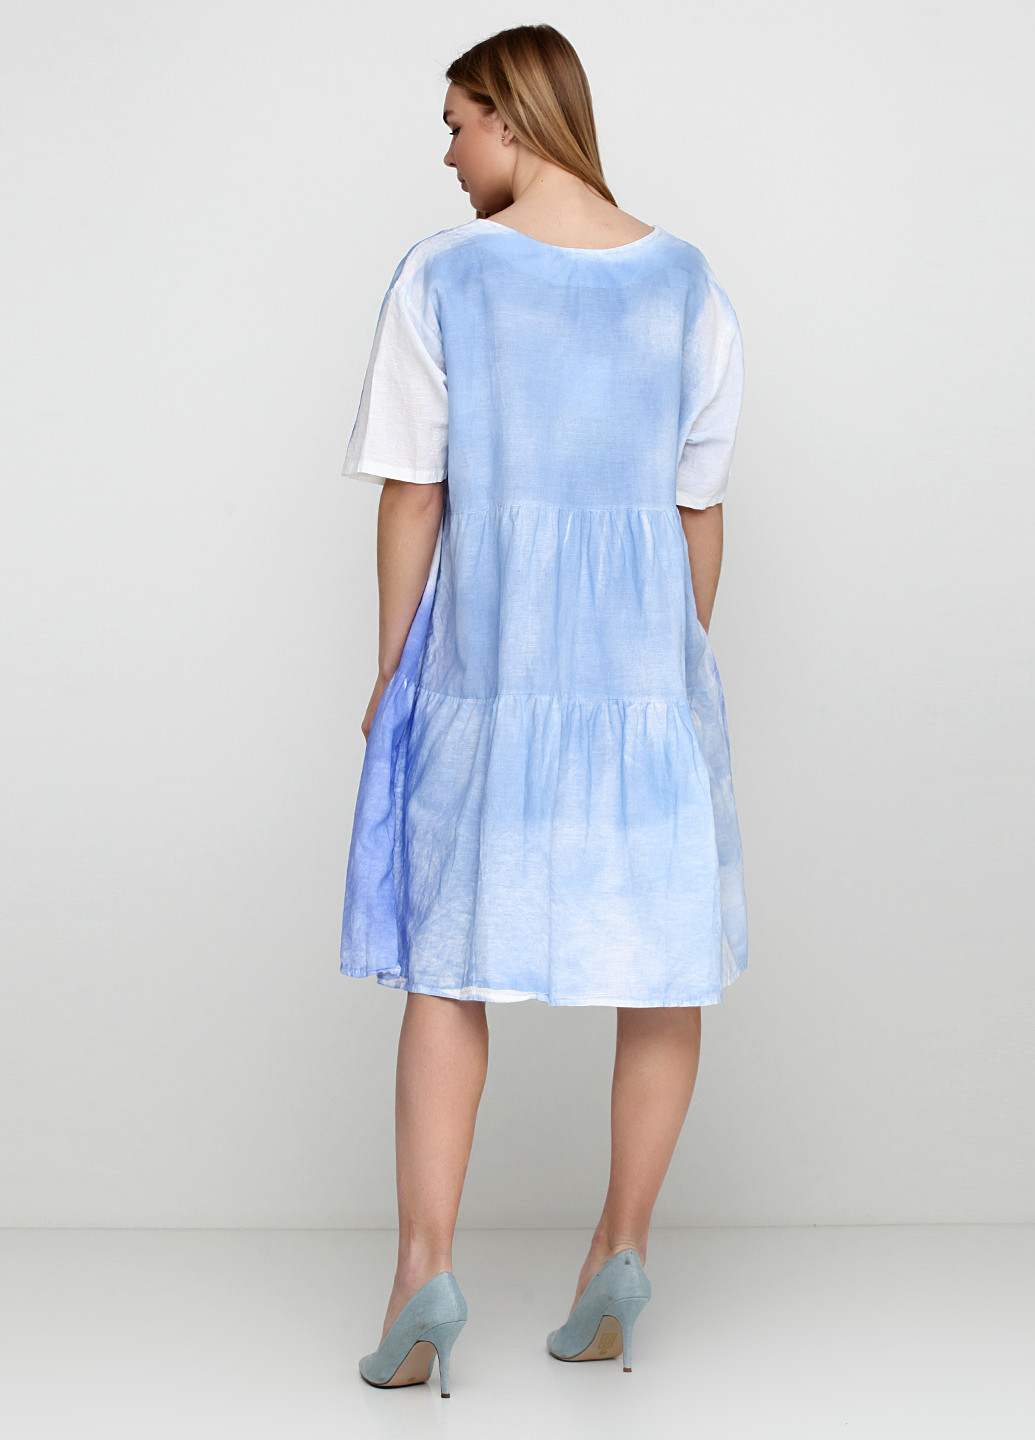 Синее кэжуал платье Made in Italy градиентное ("омбре")